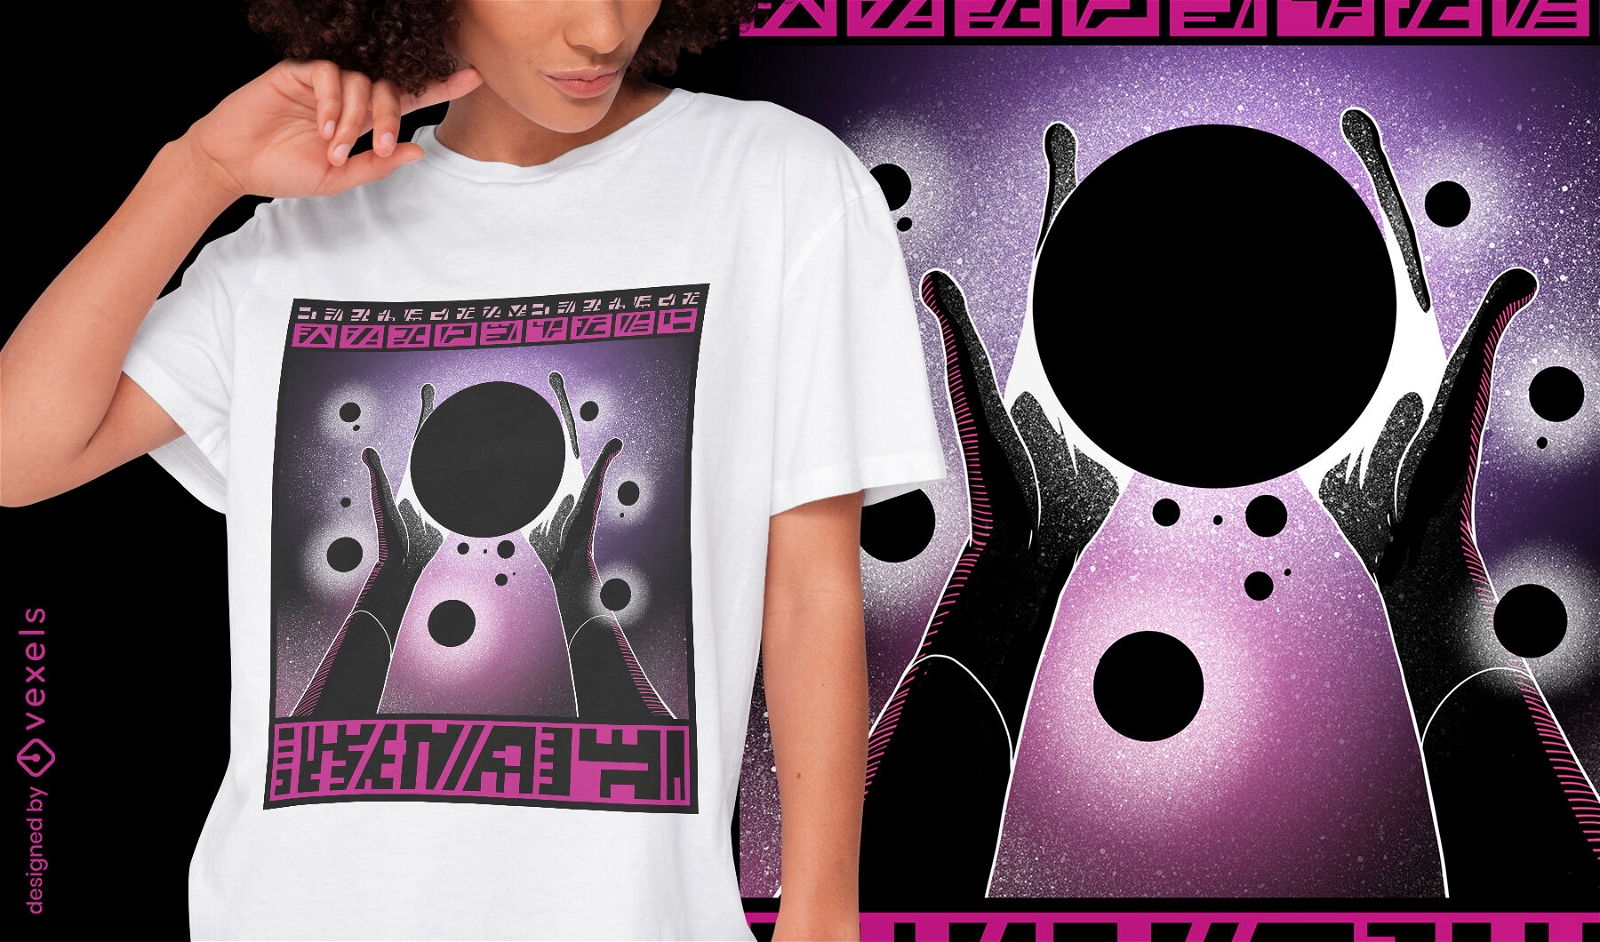 Fantasy cosmic alien hands t-shirt design